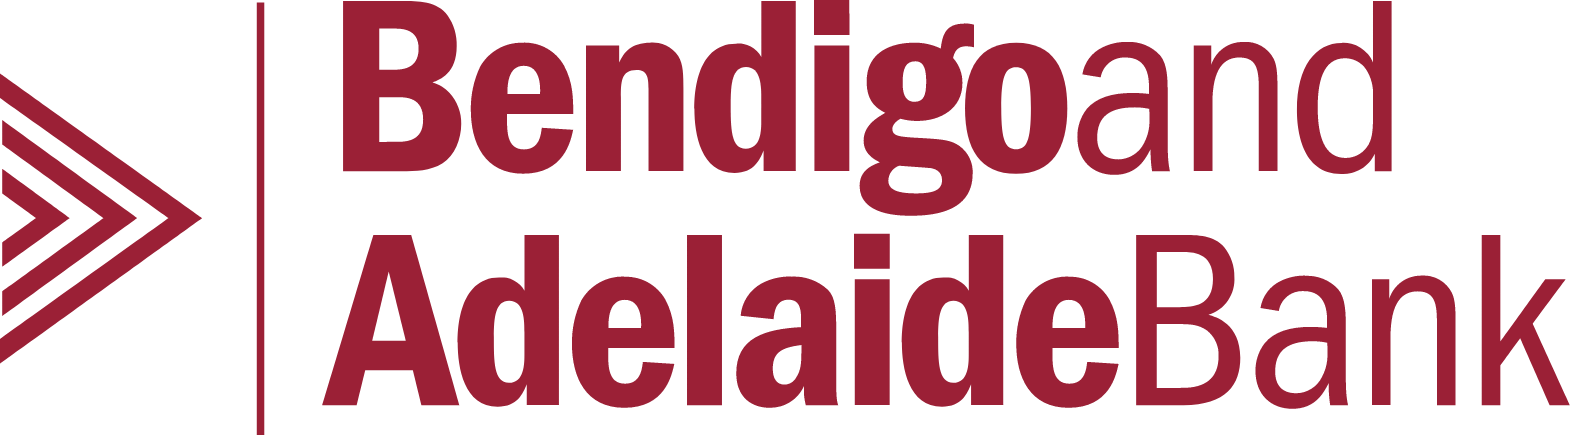 Bendigo and Adelaide Bank logo large (transparent PNG)